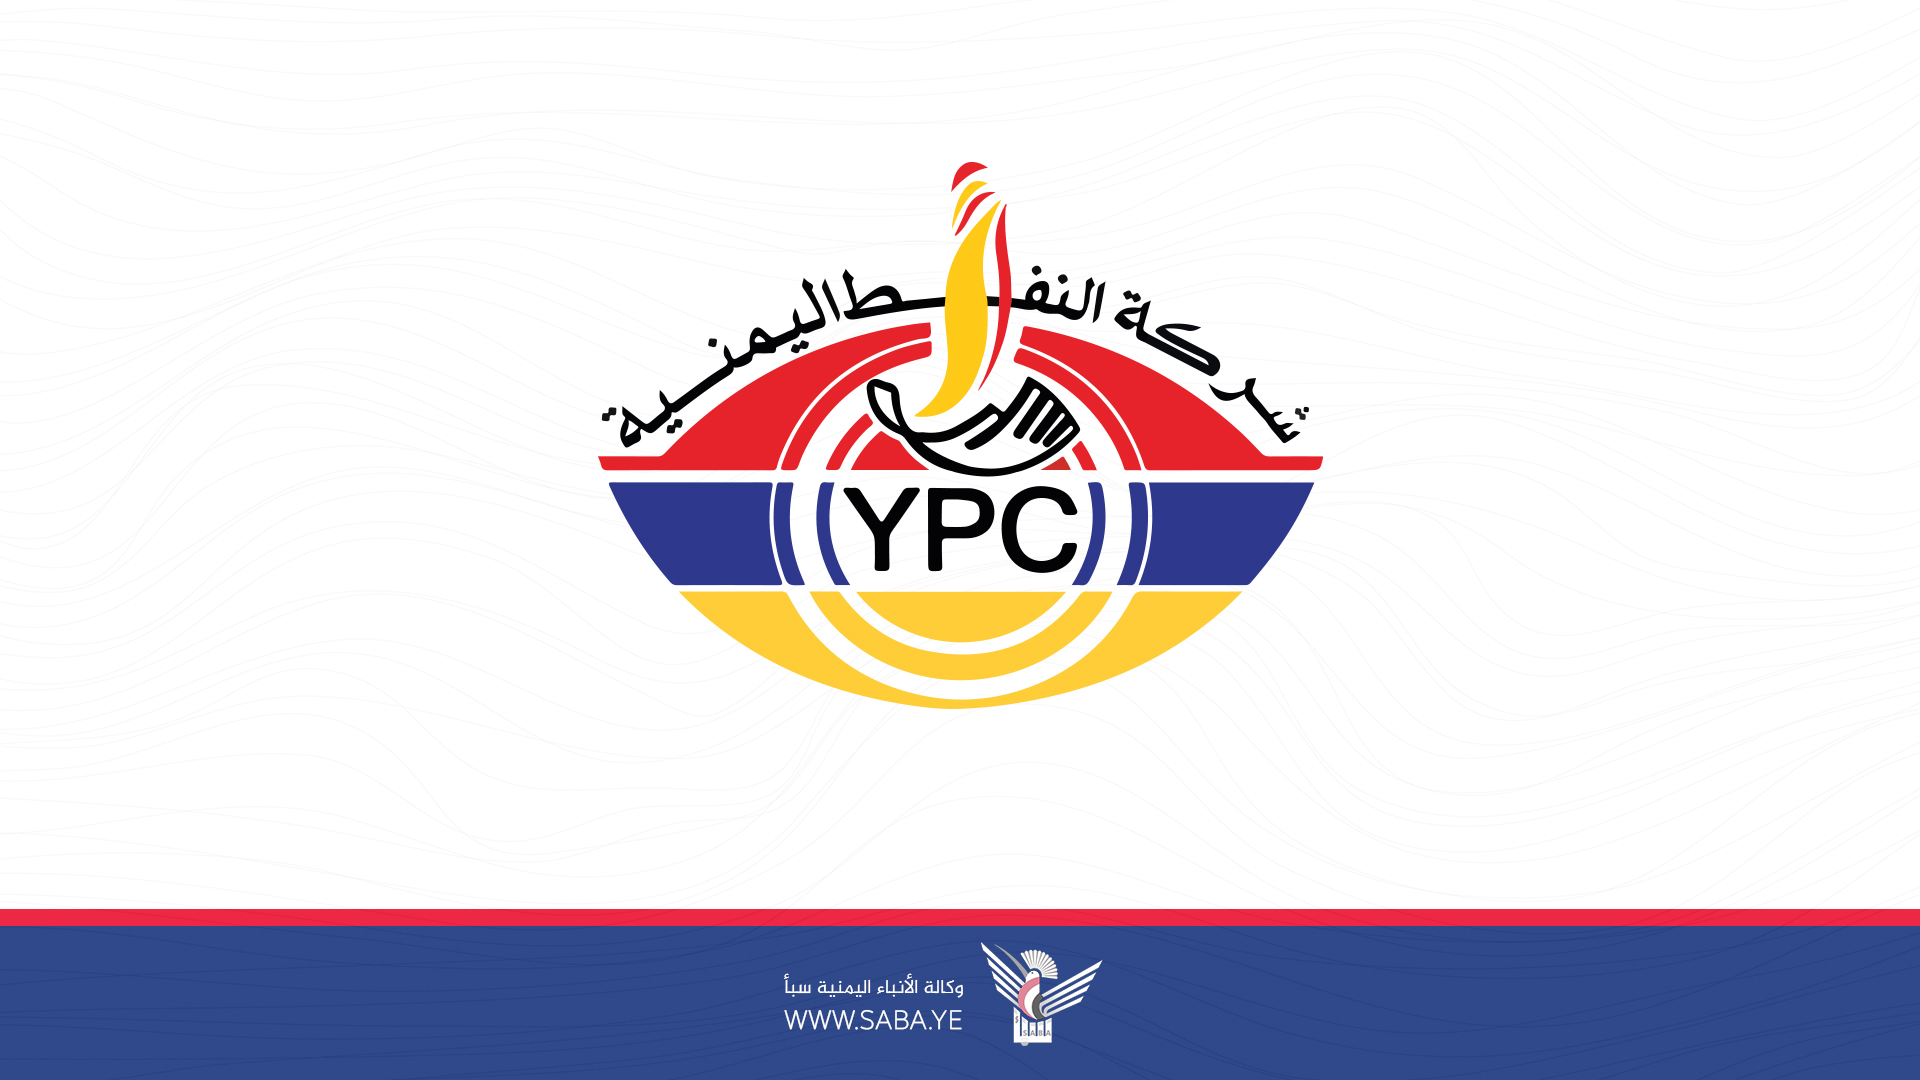 Aggression coalition detains gasoline ship: YPC